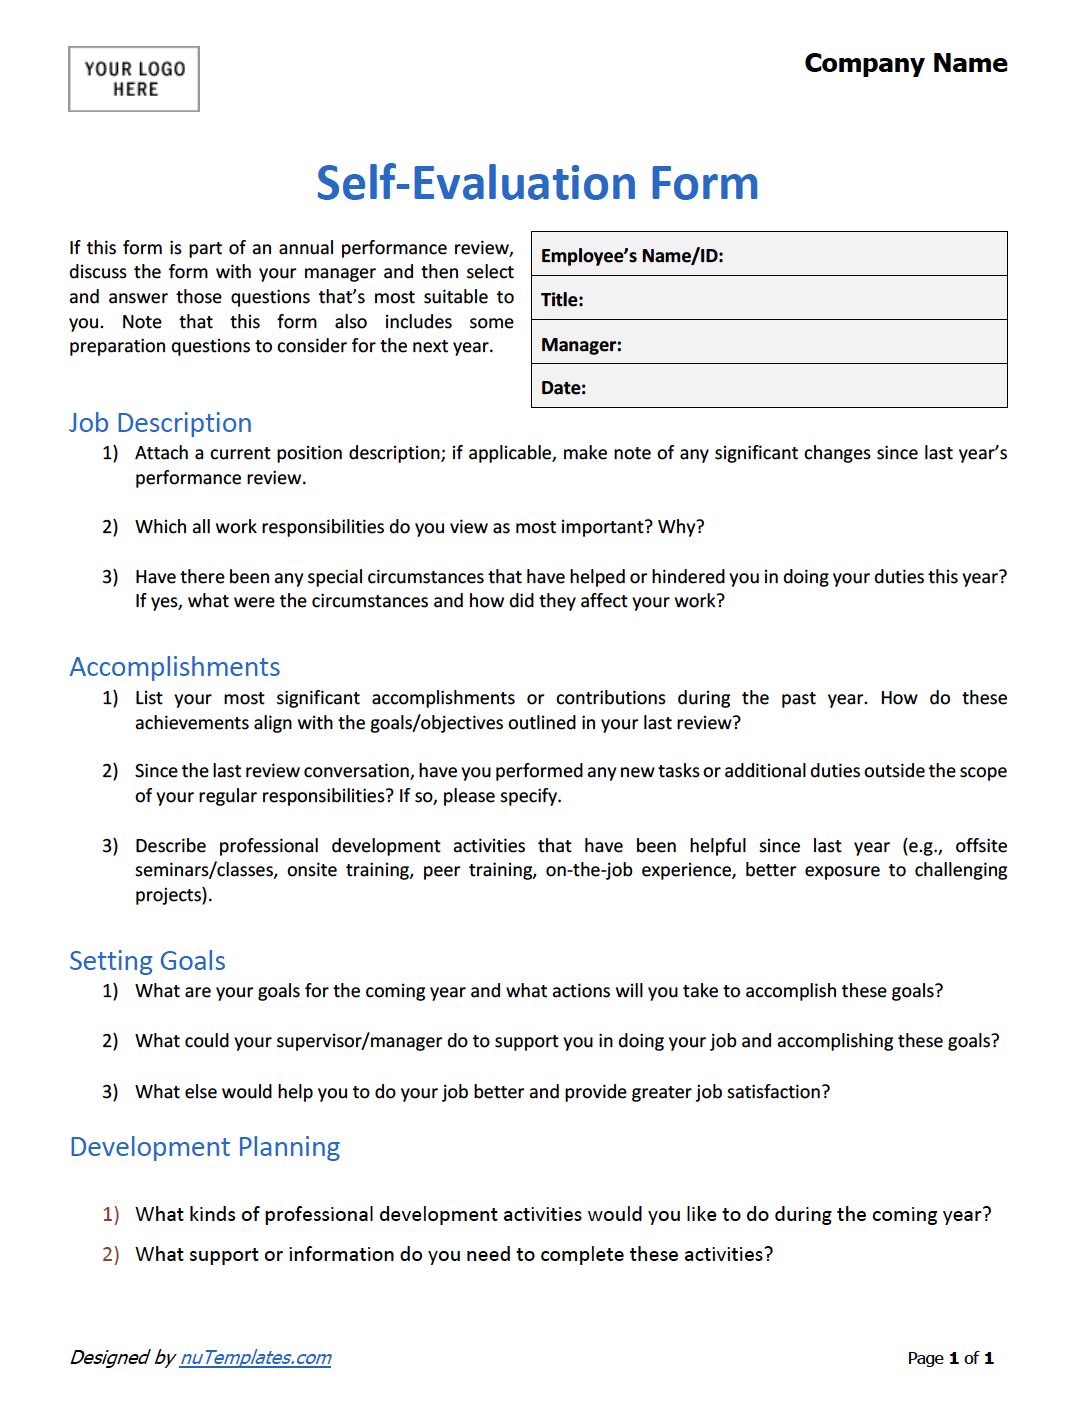 Employee-Self-Evaluation-Form-jpg